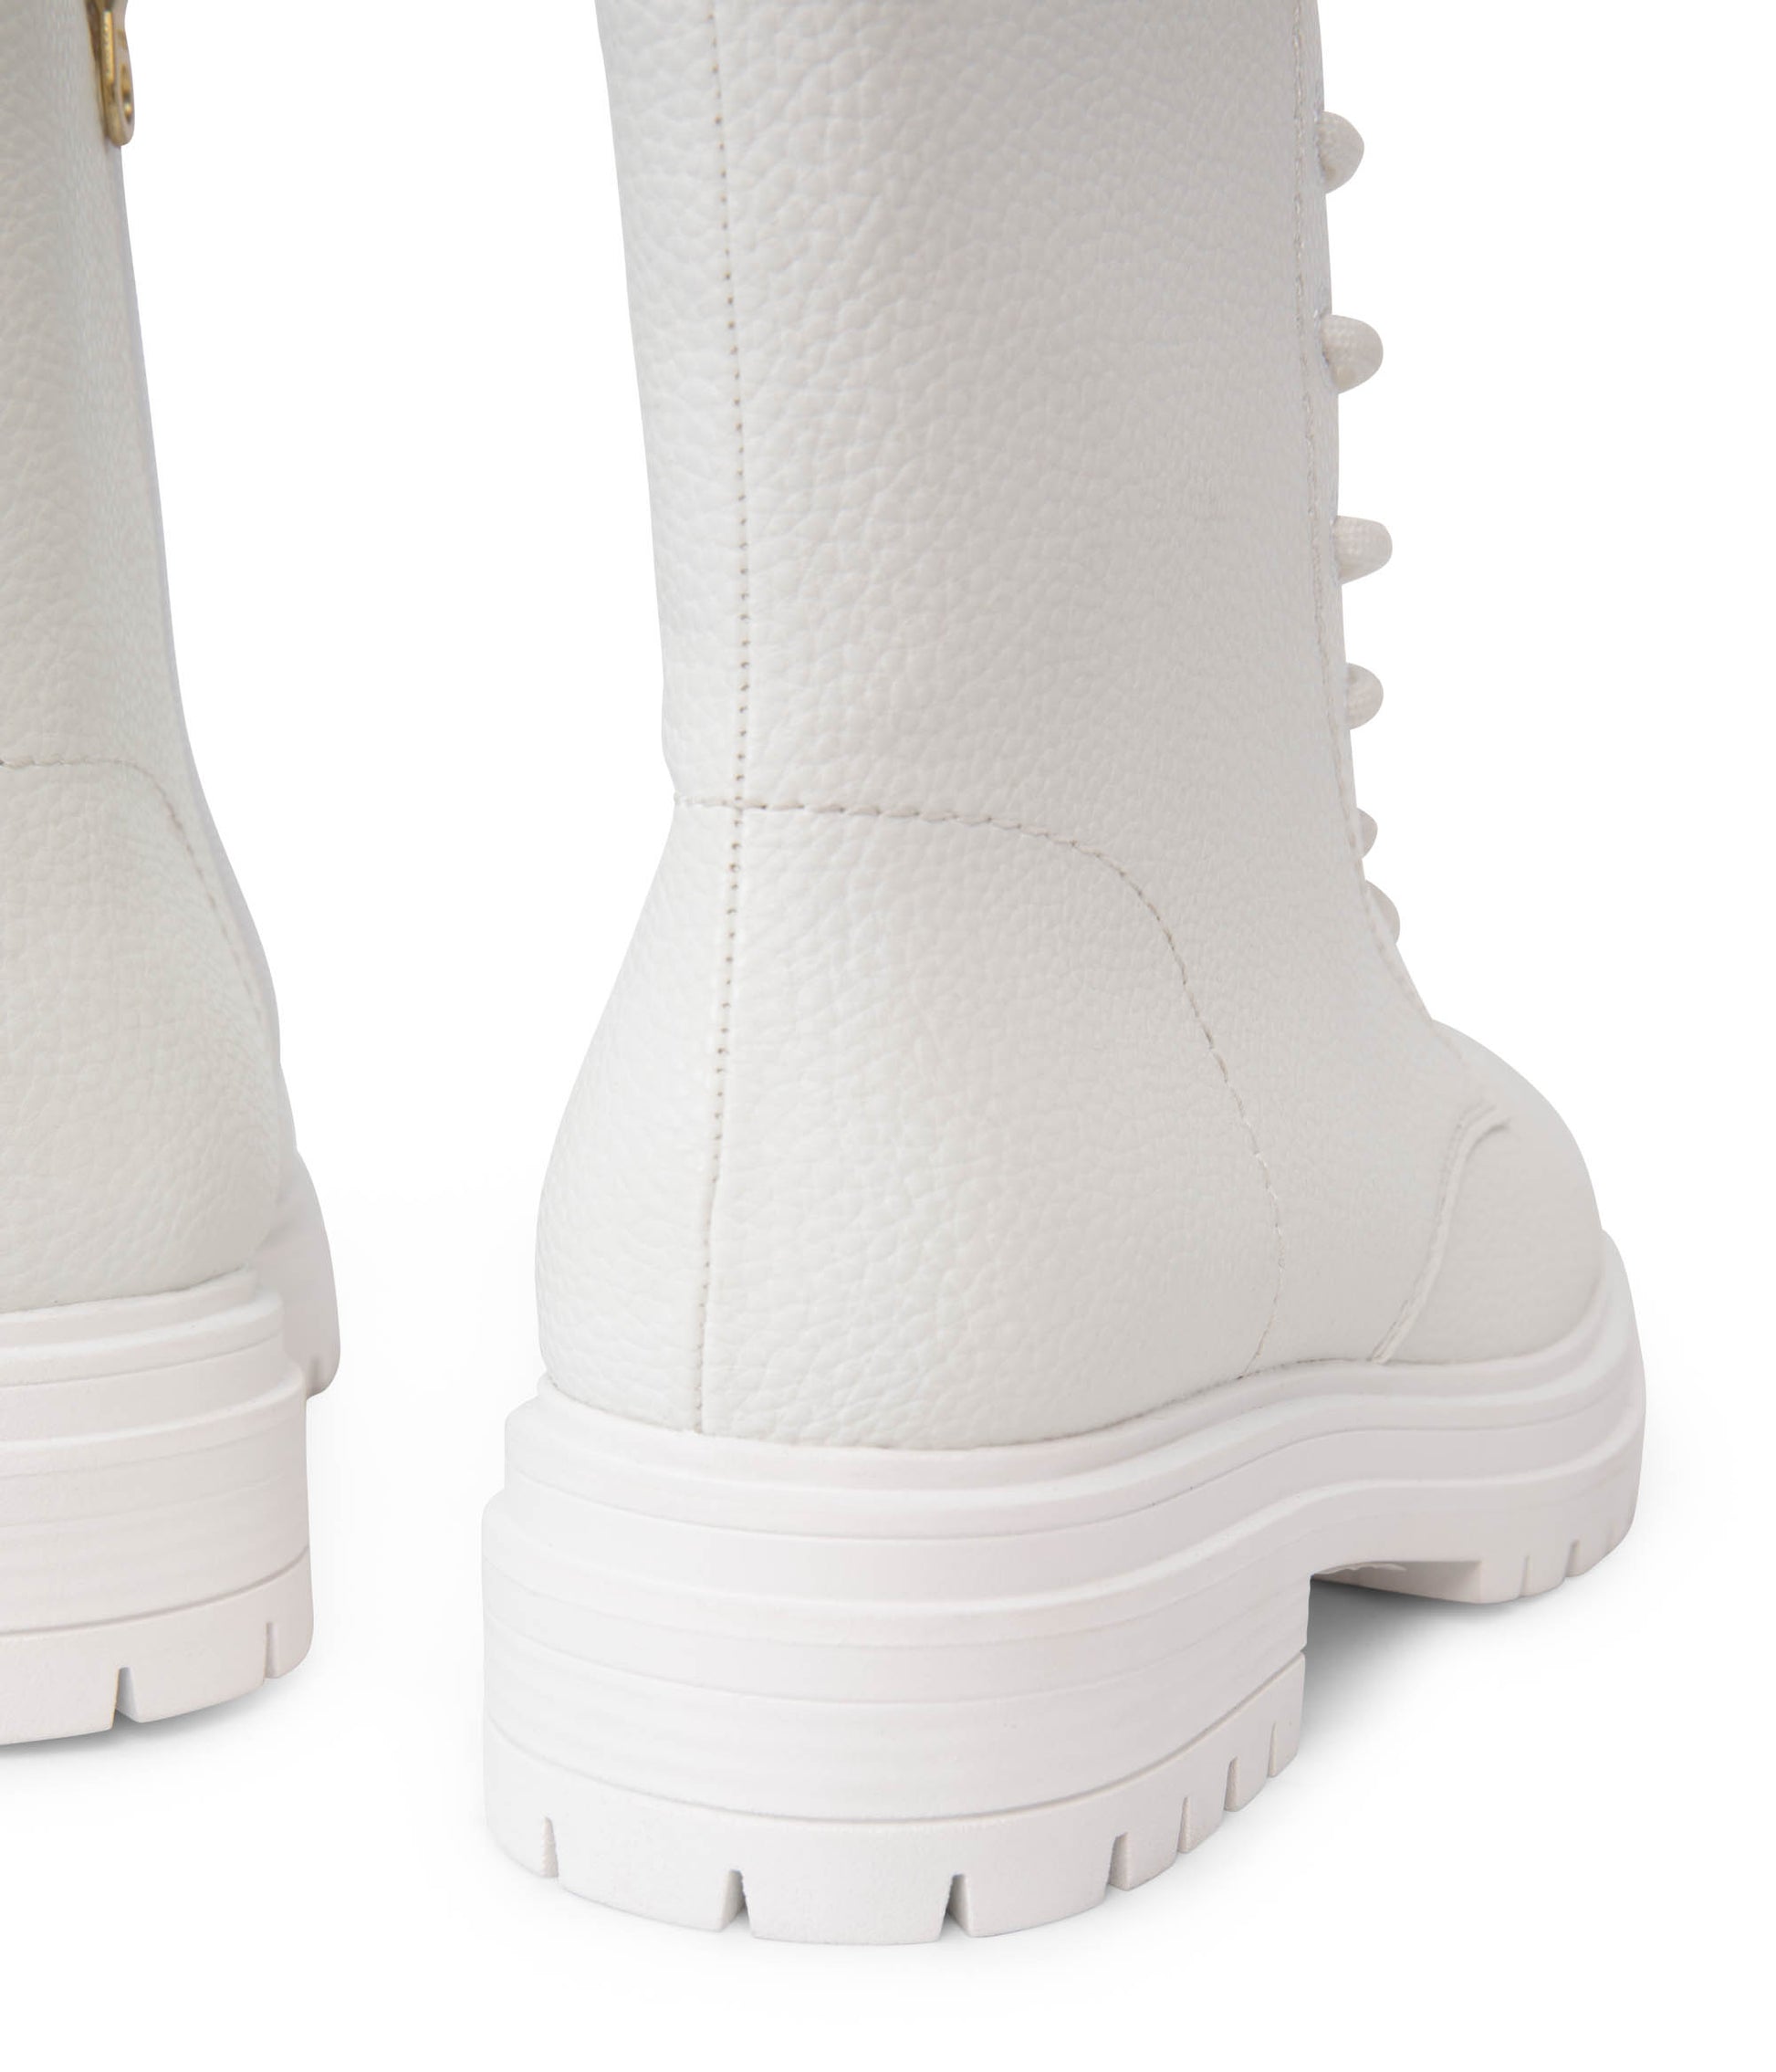 variant:: blanc -- maree shoe blanc